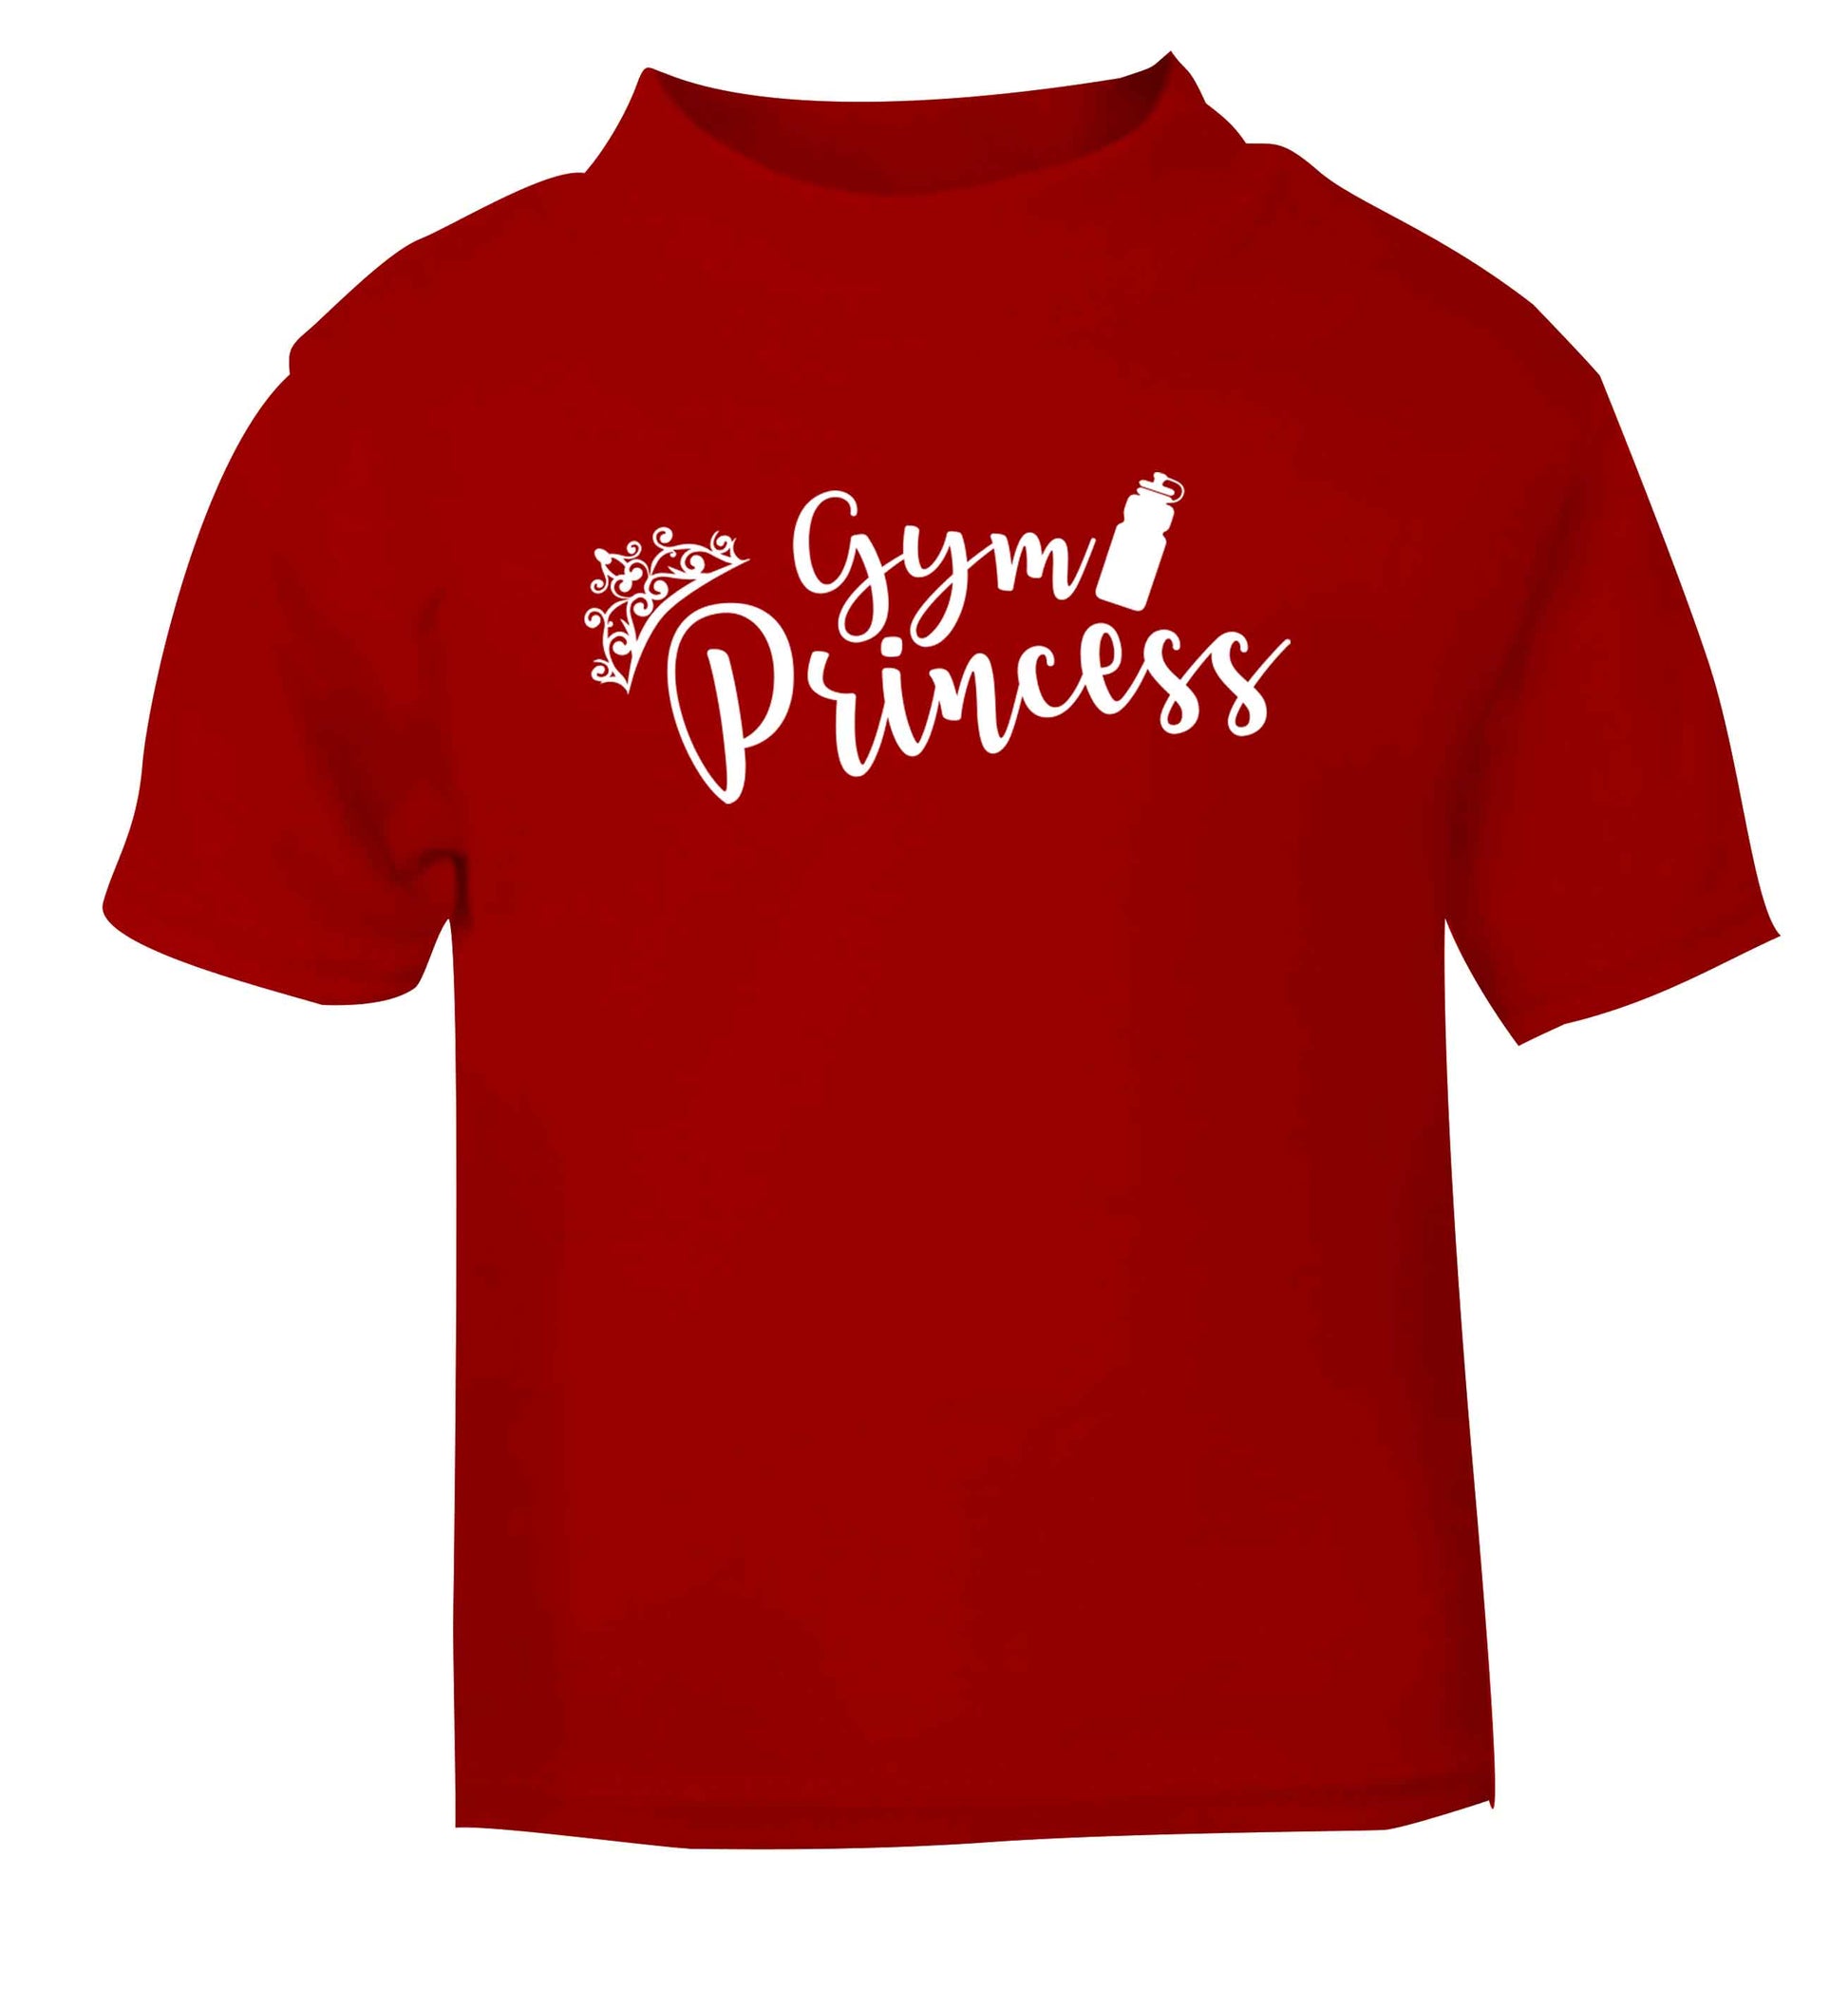 Gym princess red Baby Toddler Tshirt 2 Years